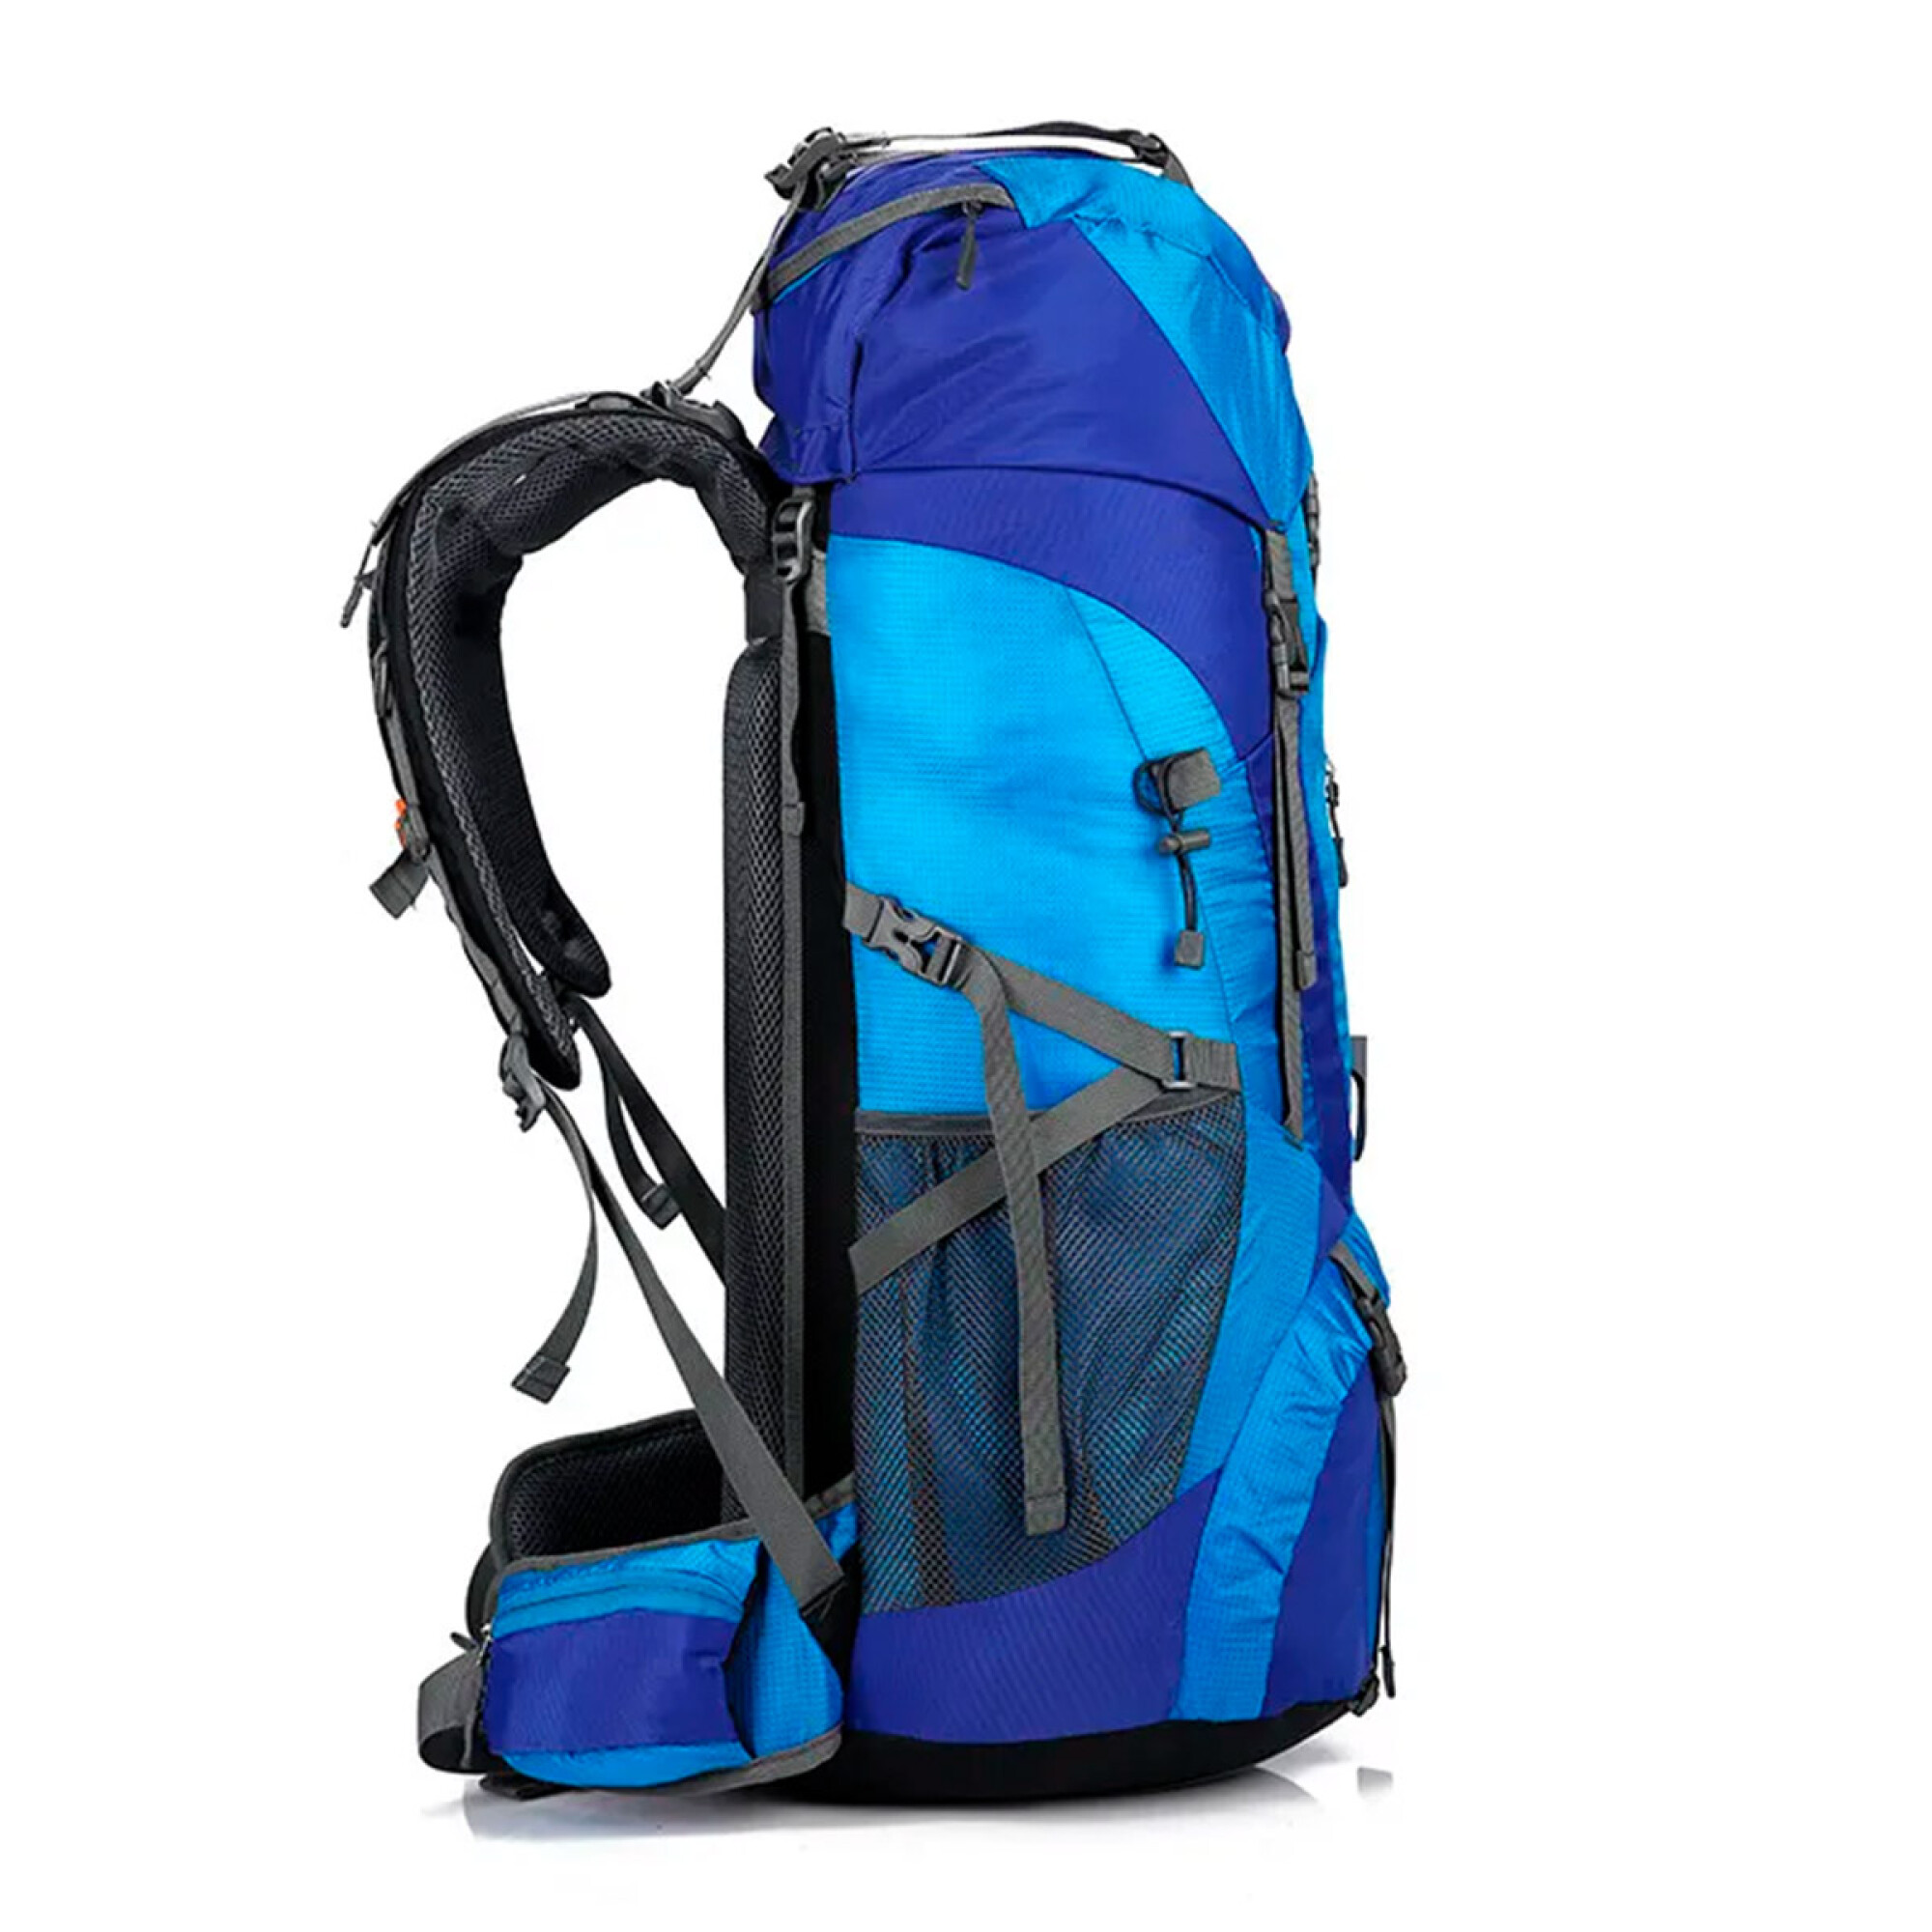 Mochila De Acampada / Hiking Modelo Trek 33 (33 Litros) Acampada / Camping  Trespass (Azul Eléctrico) - Azul